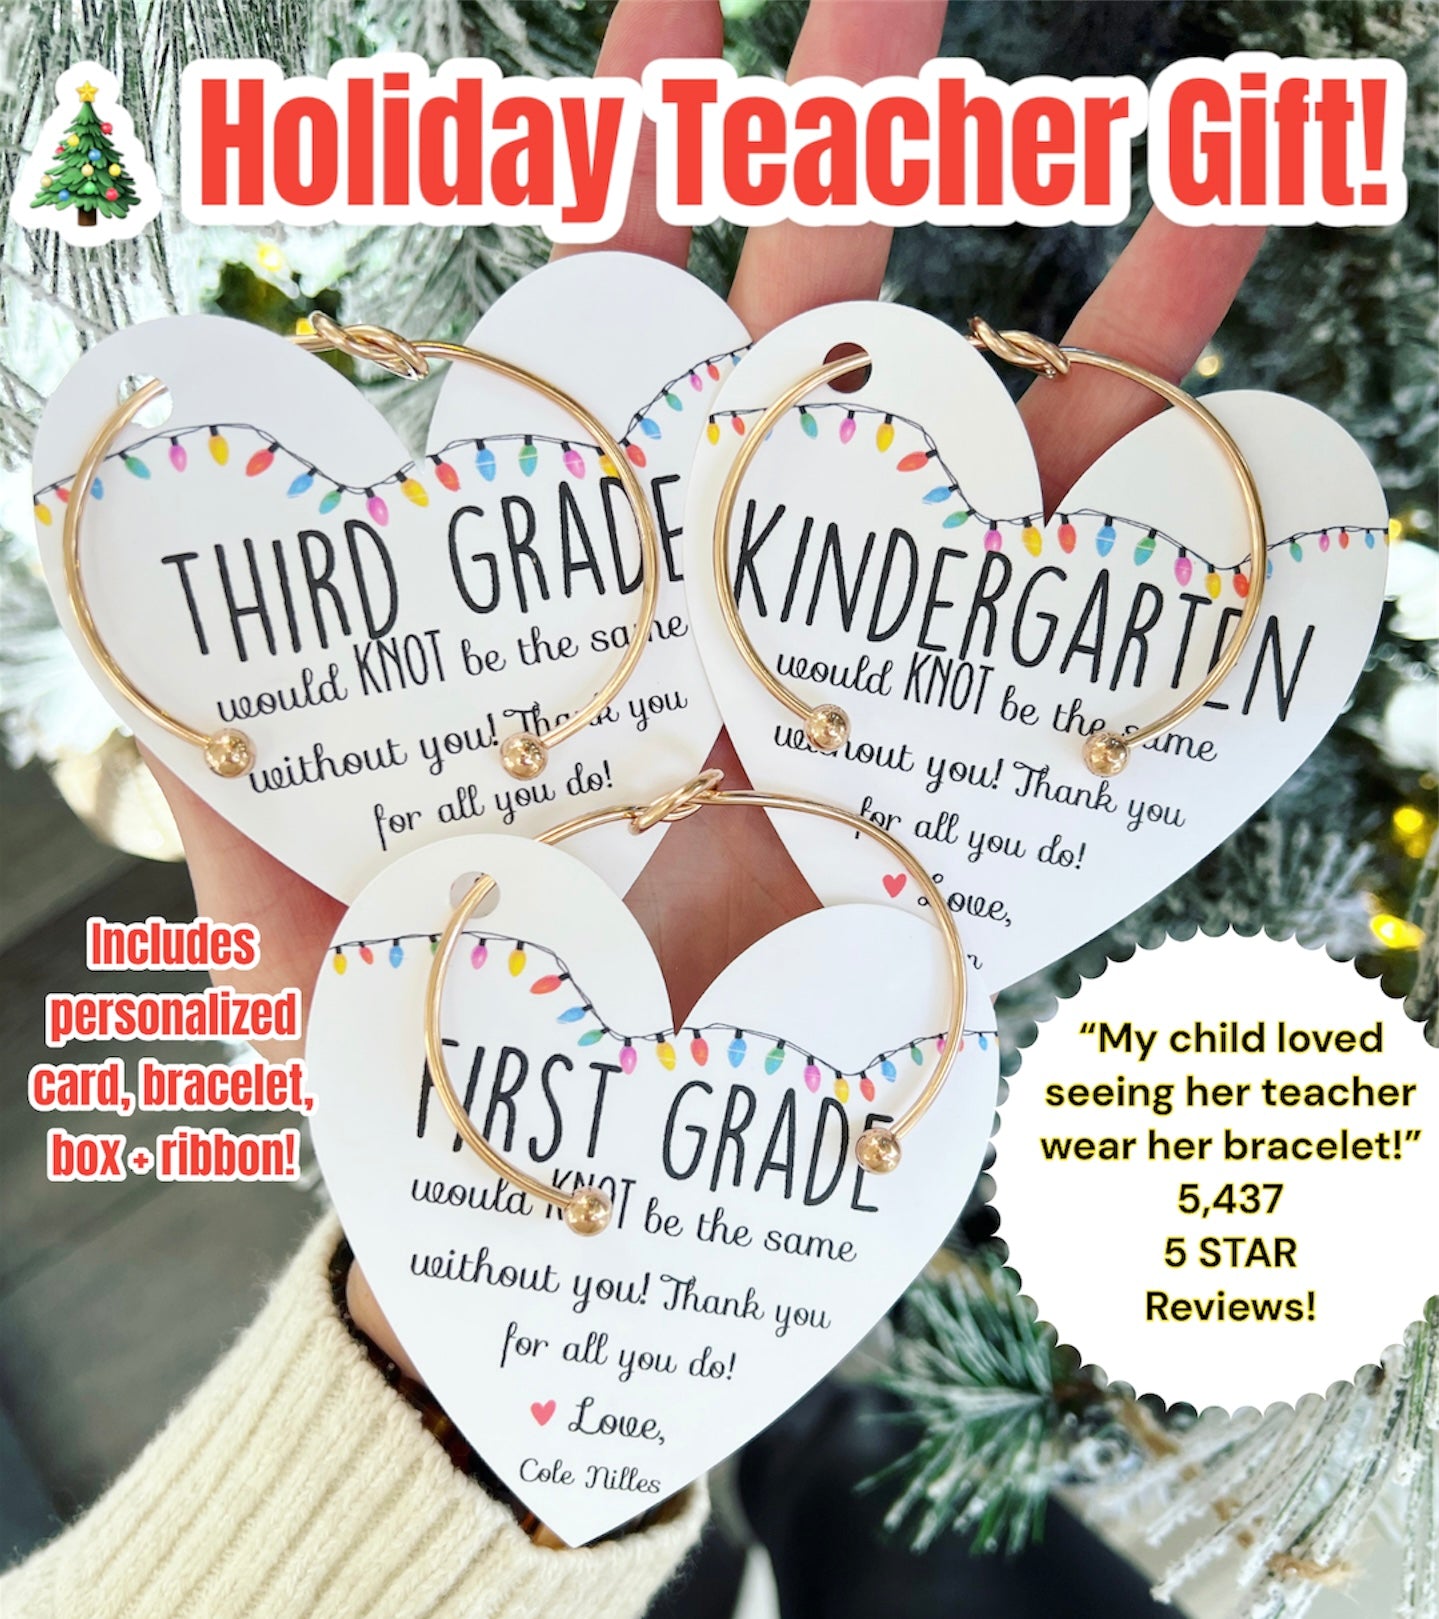 Holiday Christmas Teacher Gift! TOP SELLER back in stock! 🎄